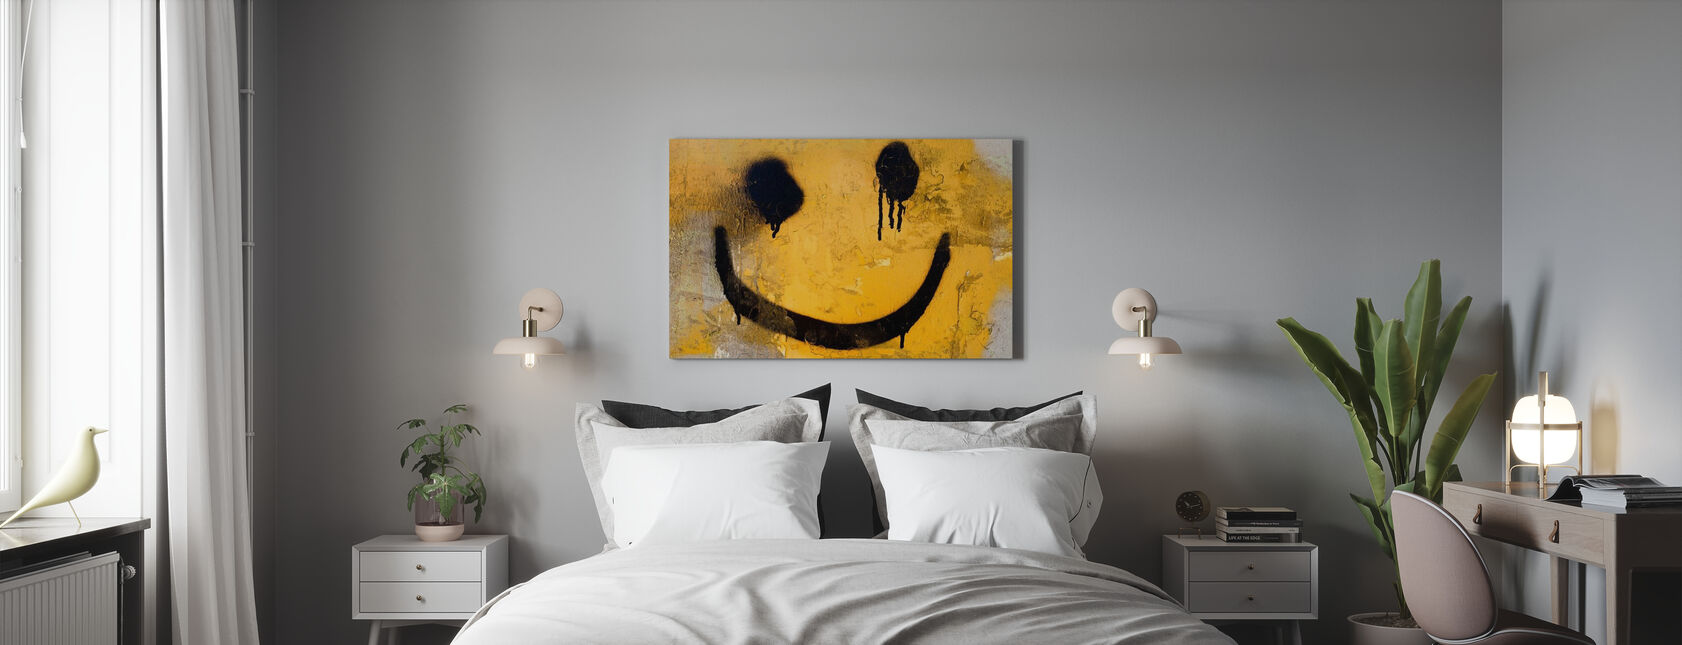 Smiley Face - Canvas print - Bedroom